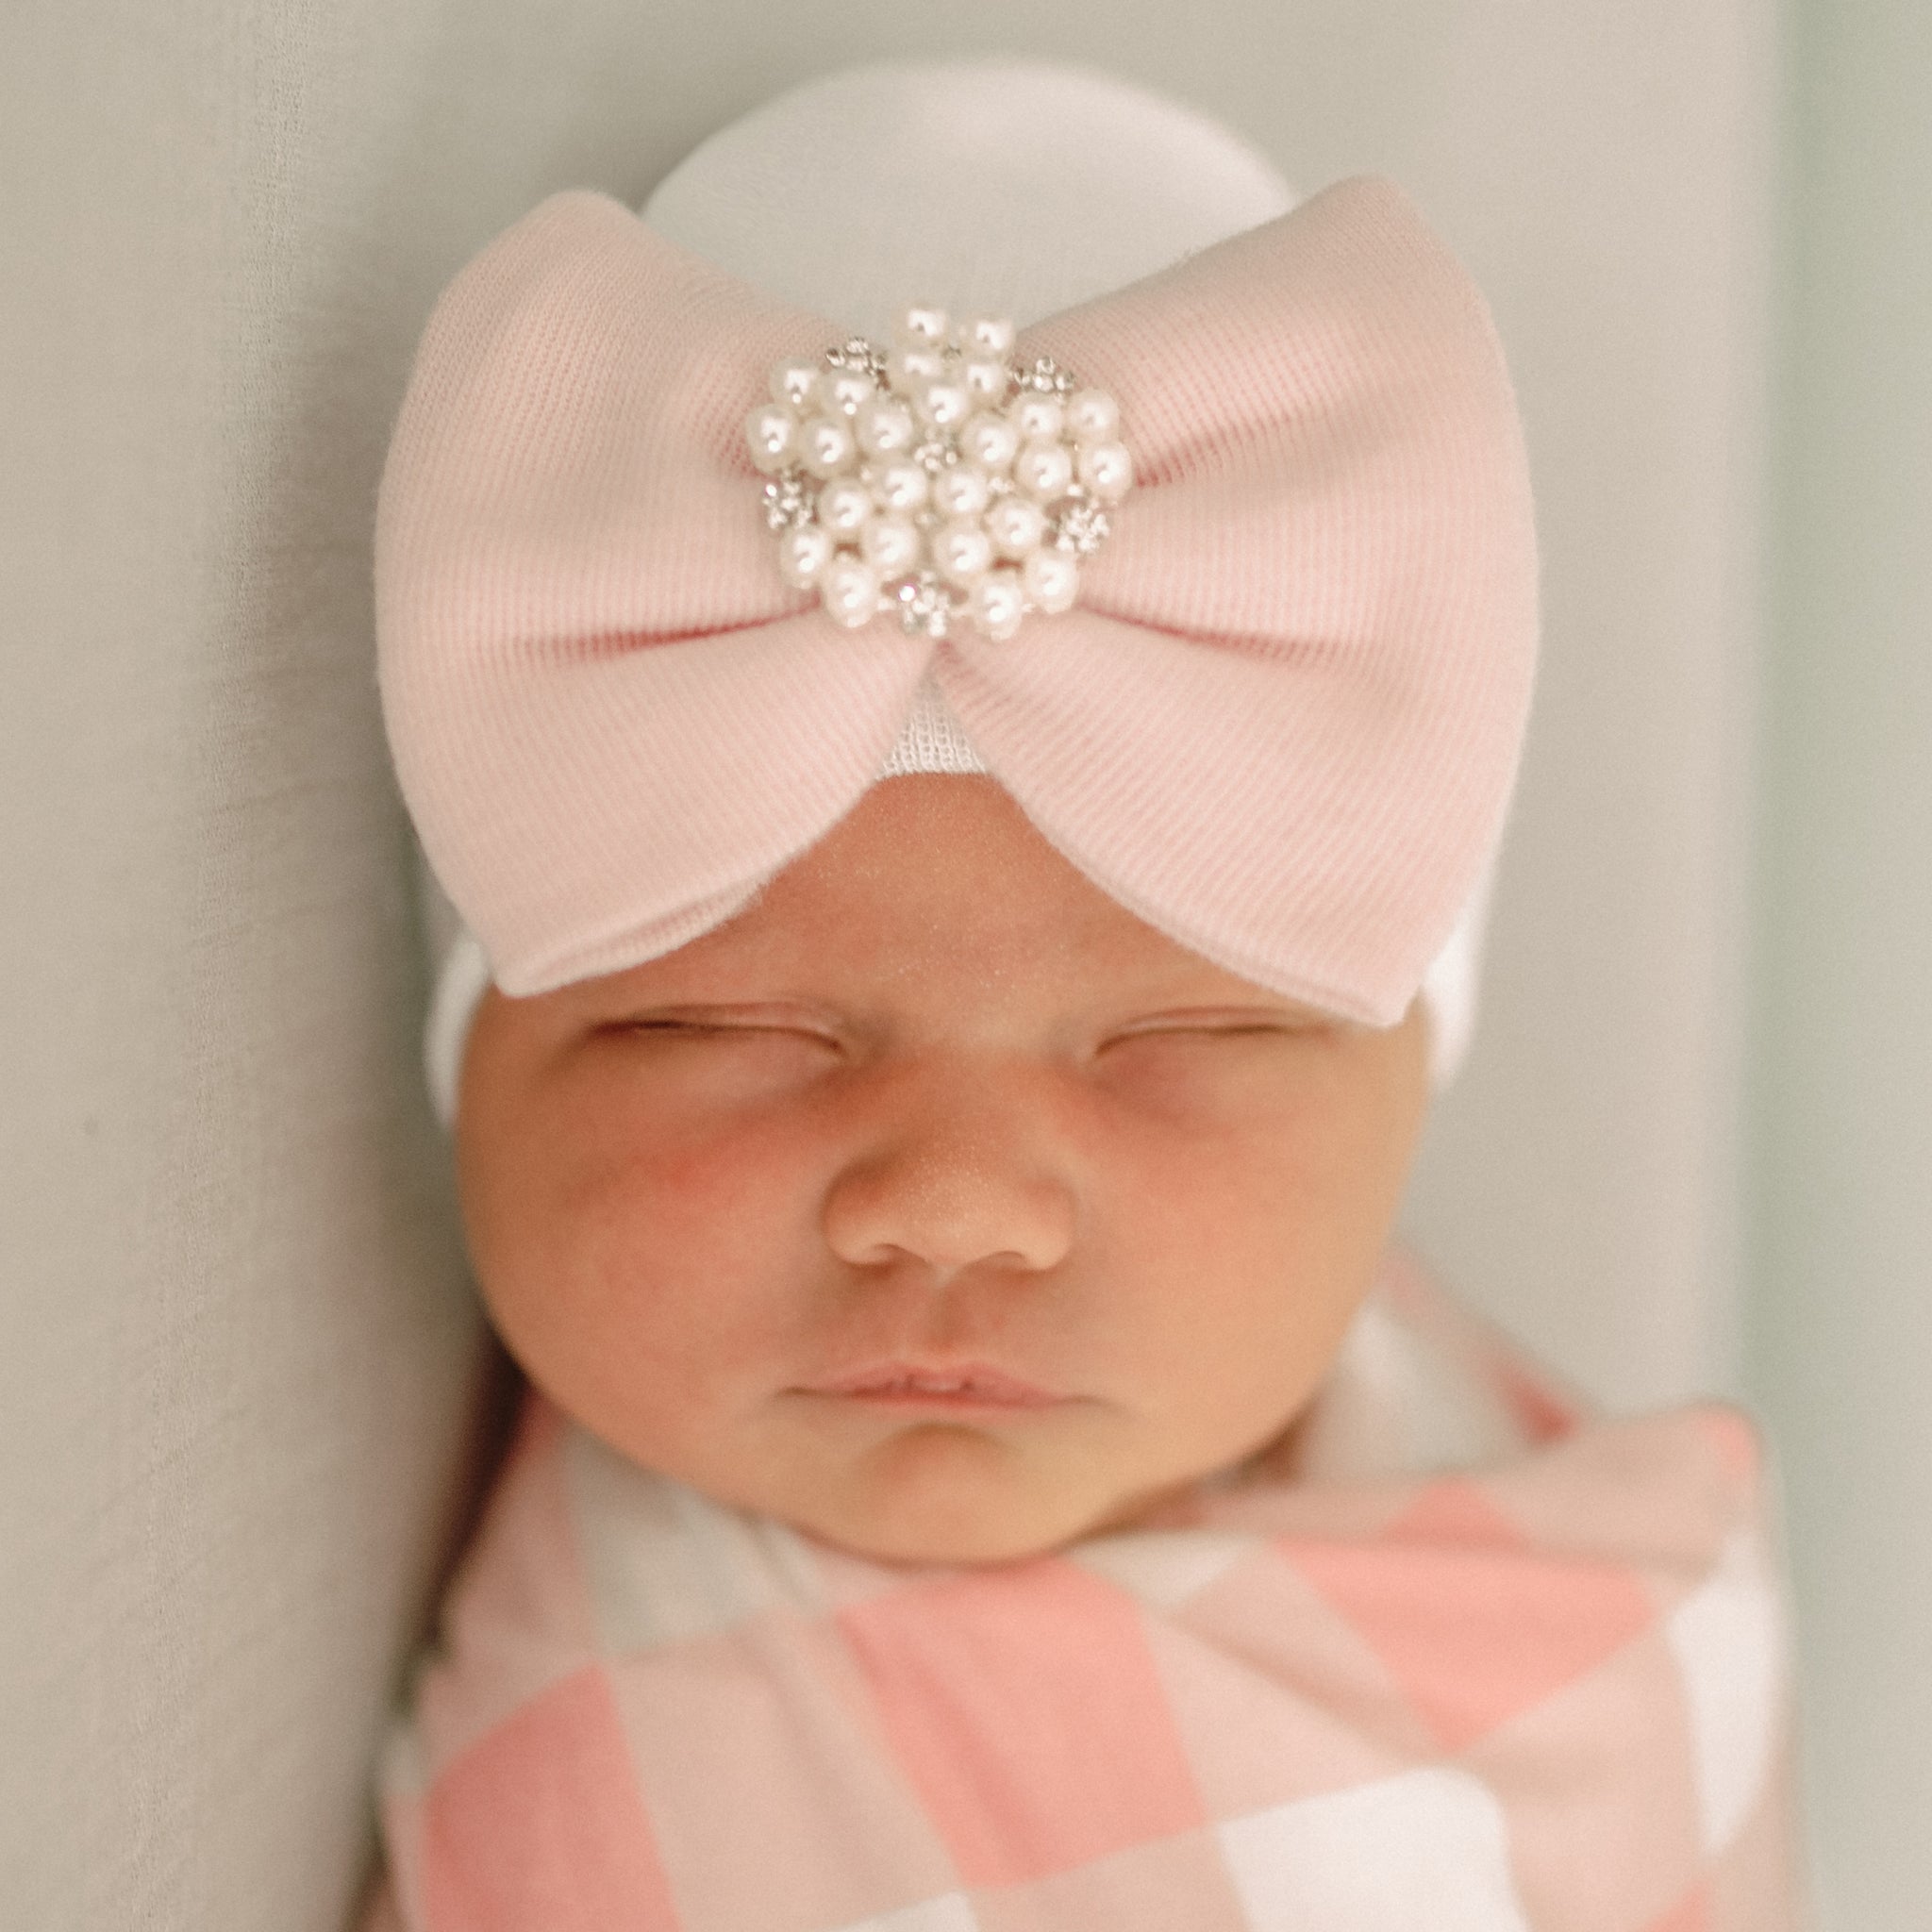 ilybean Irene Newborn Girl Hospital Hat with Pearl and Rhinestone Jewel at Center